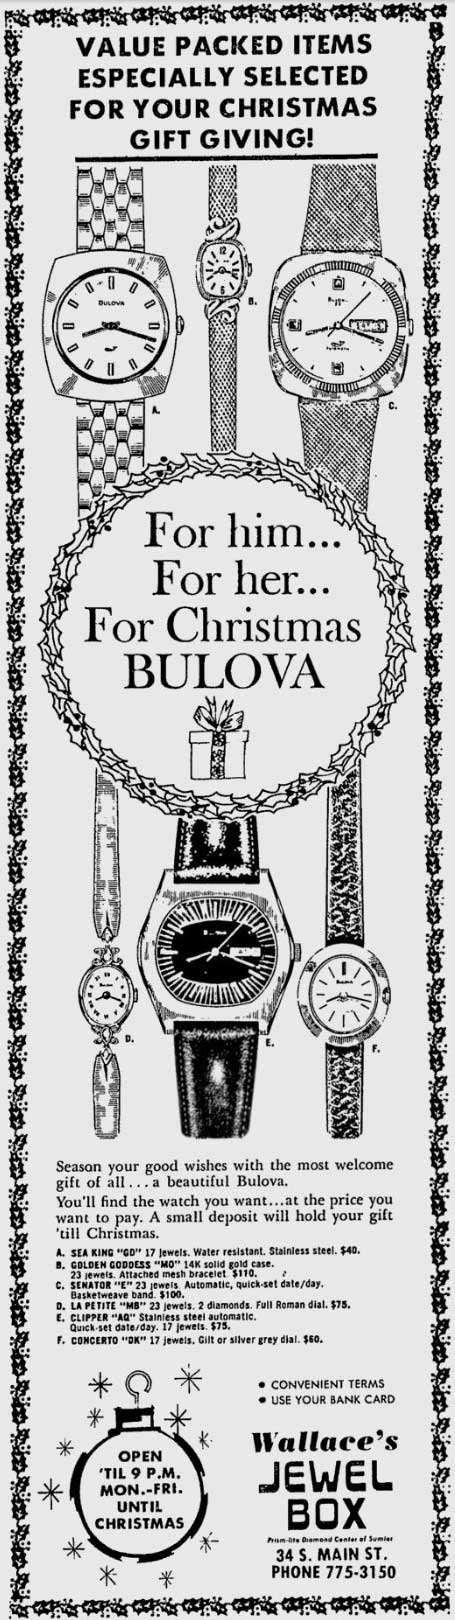 1972 Bulova advert